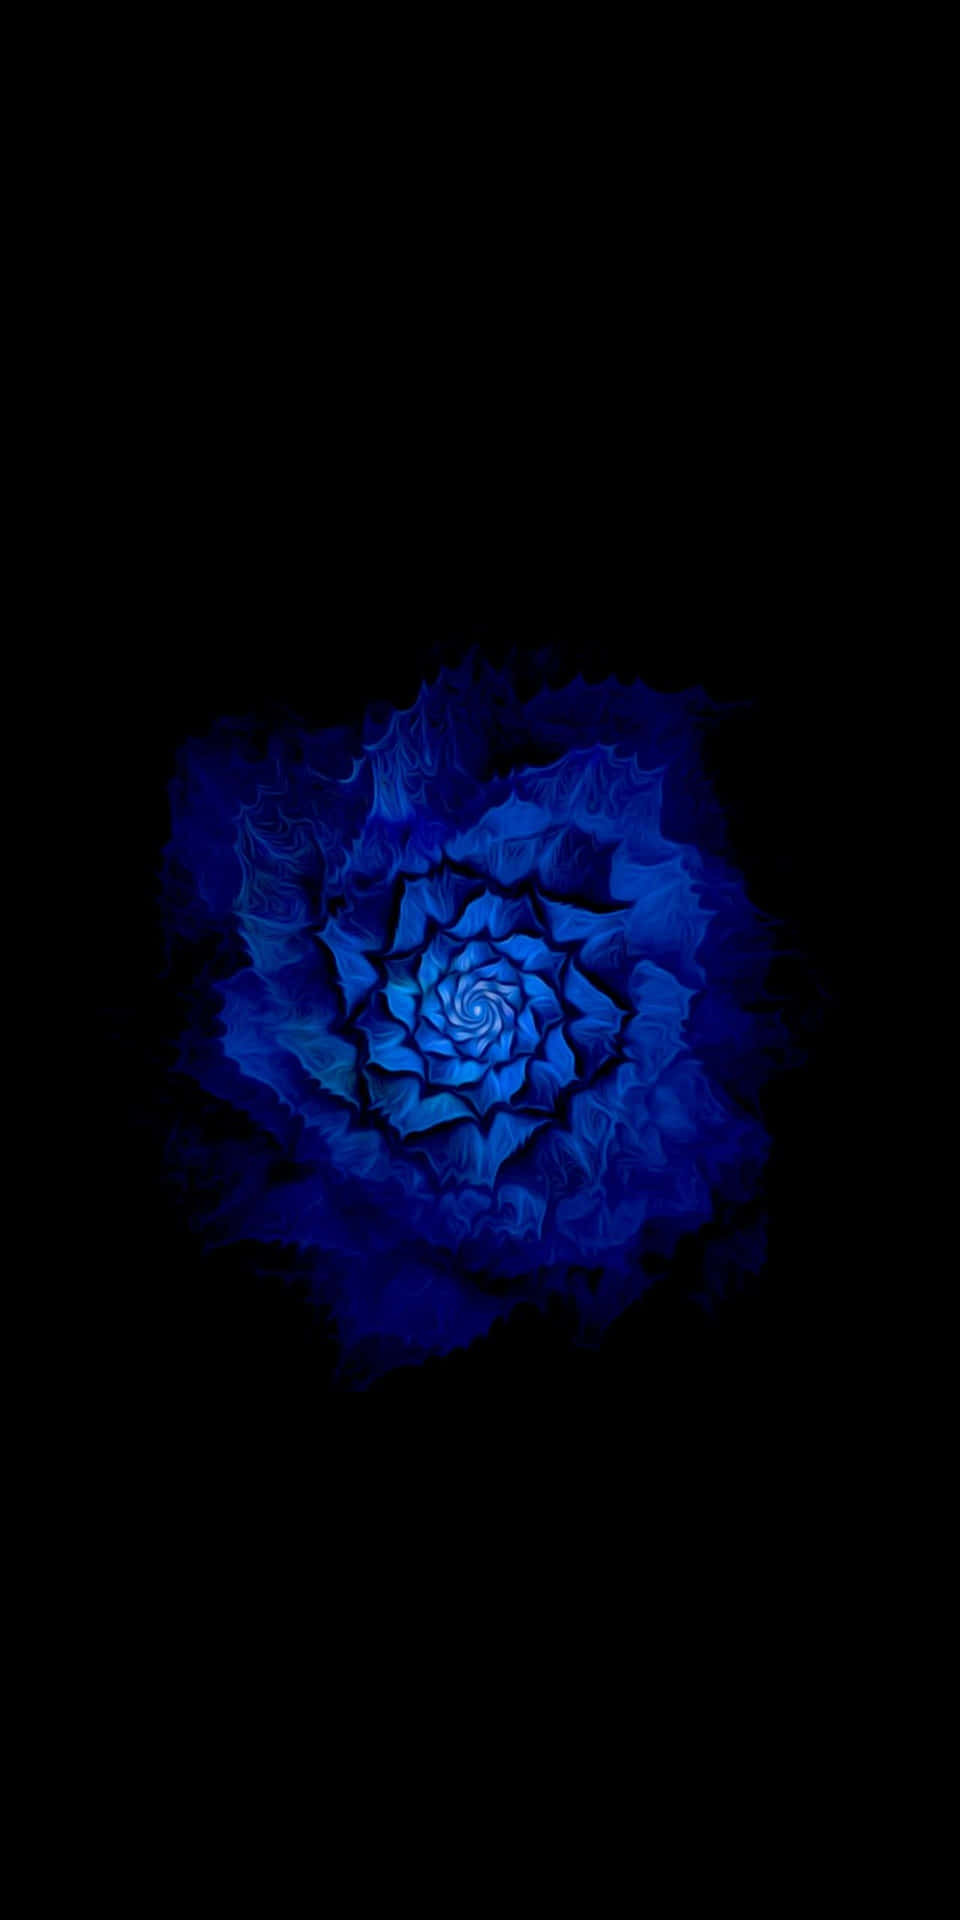 A Blue Flower On A Black Background Wallpaper